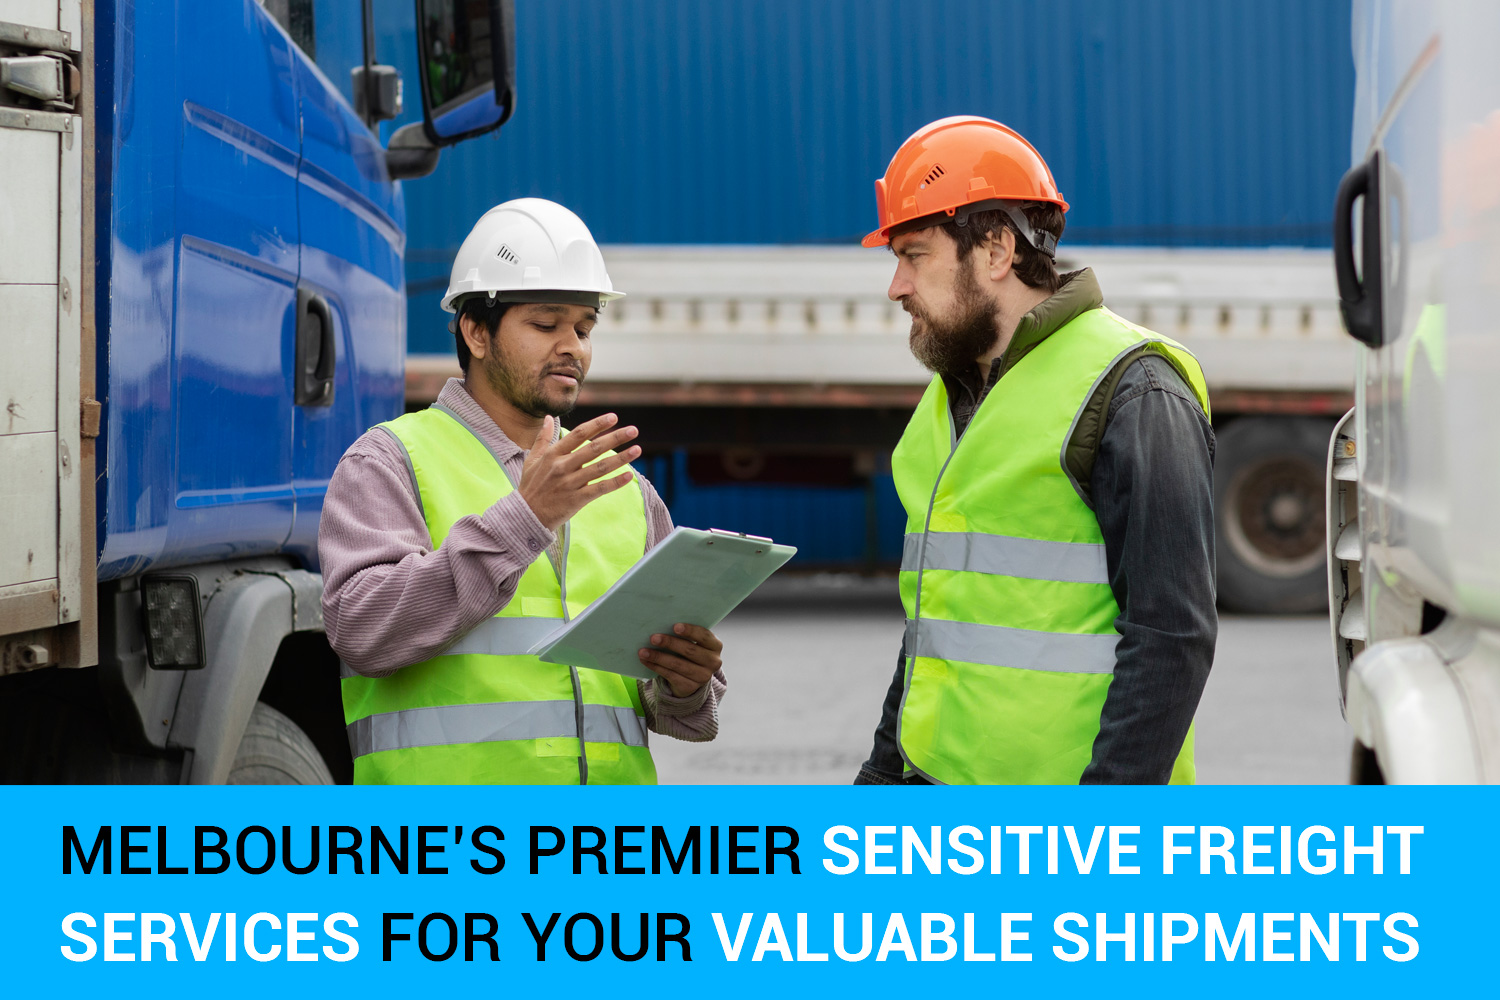 Melbourne’s Premier Sensitive Freight Services for Your Valuable Shipments